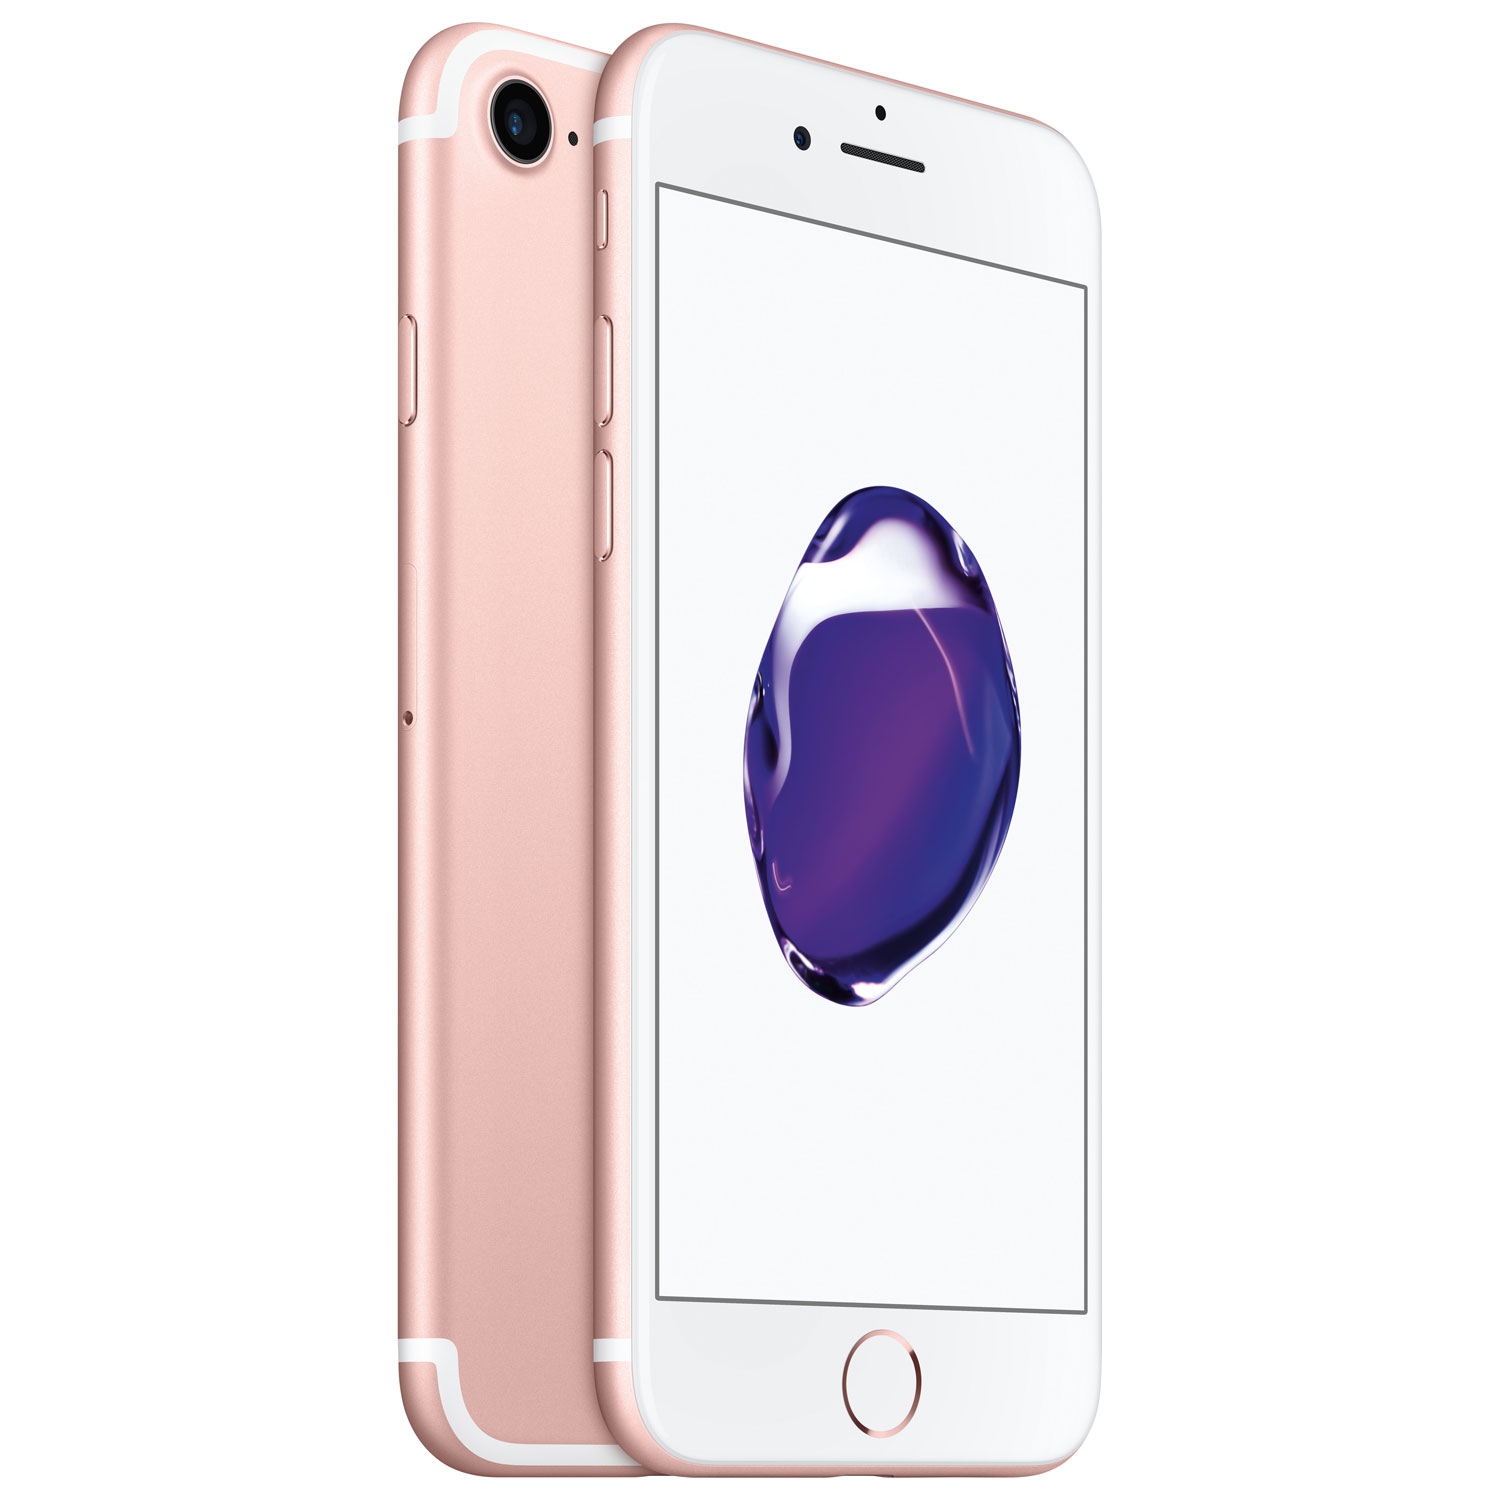 Refurbished (Excellent) - Apple iPhone 7 32GB Smartphone - Rose Gold - Unlocked - Certified Refurbished